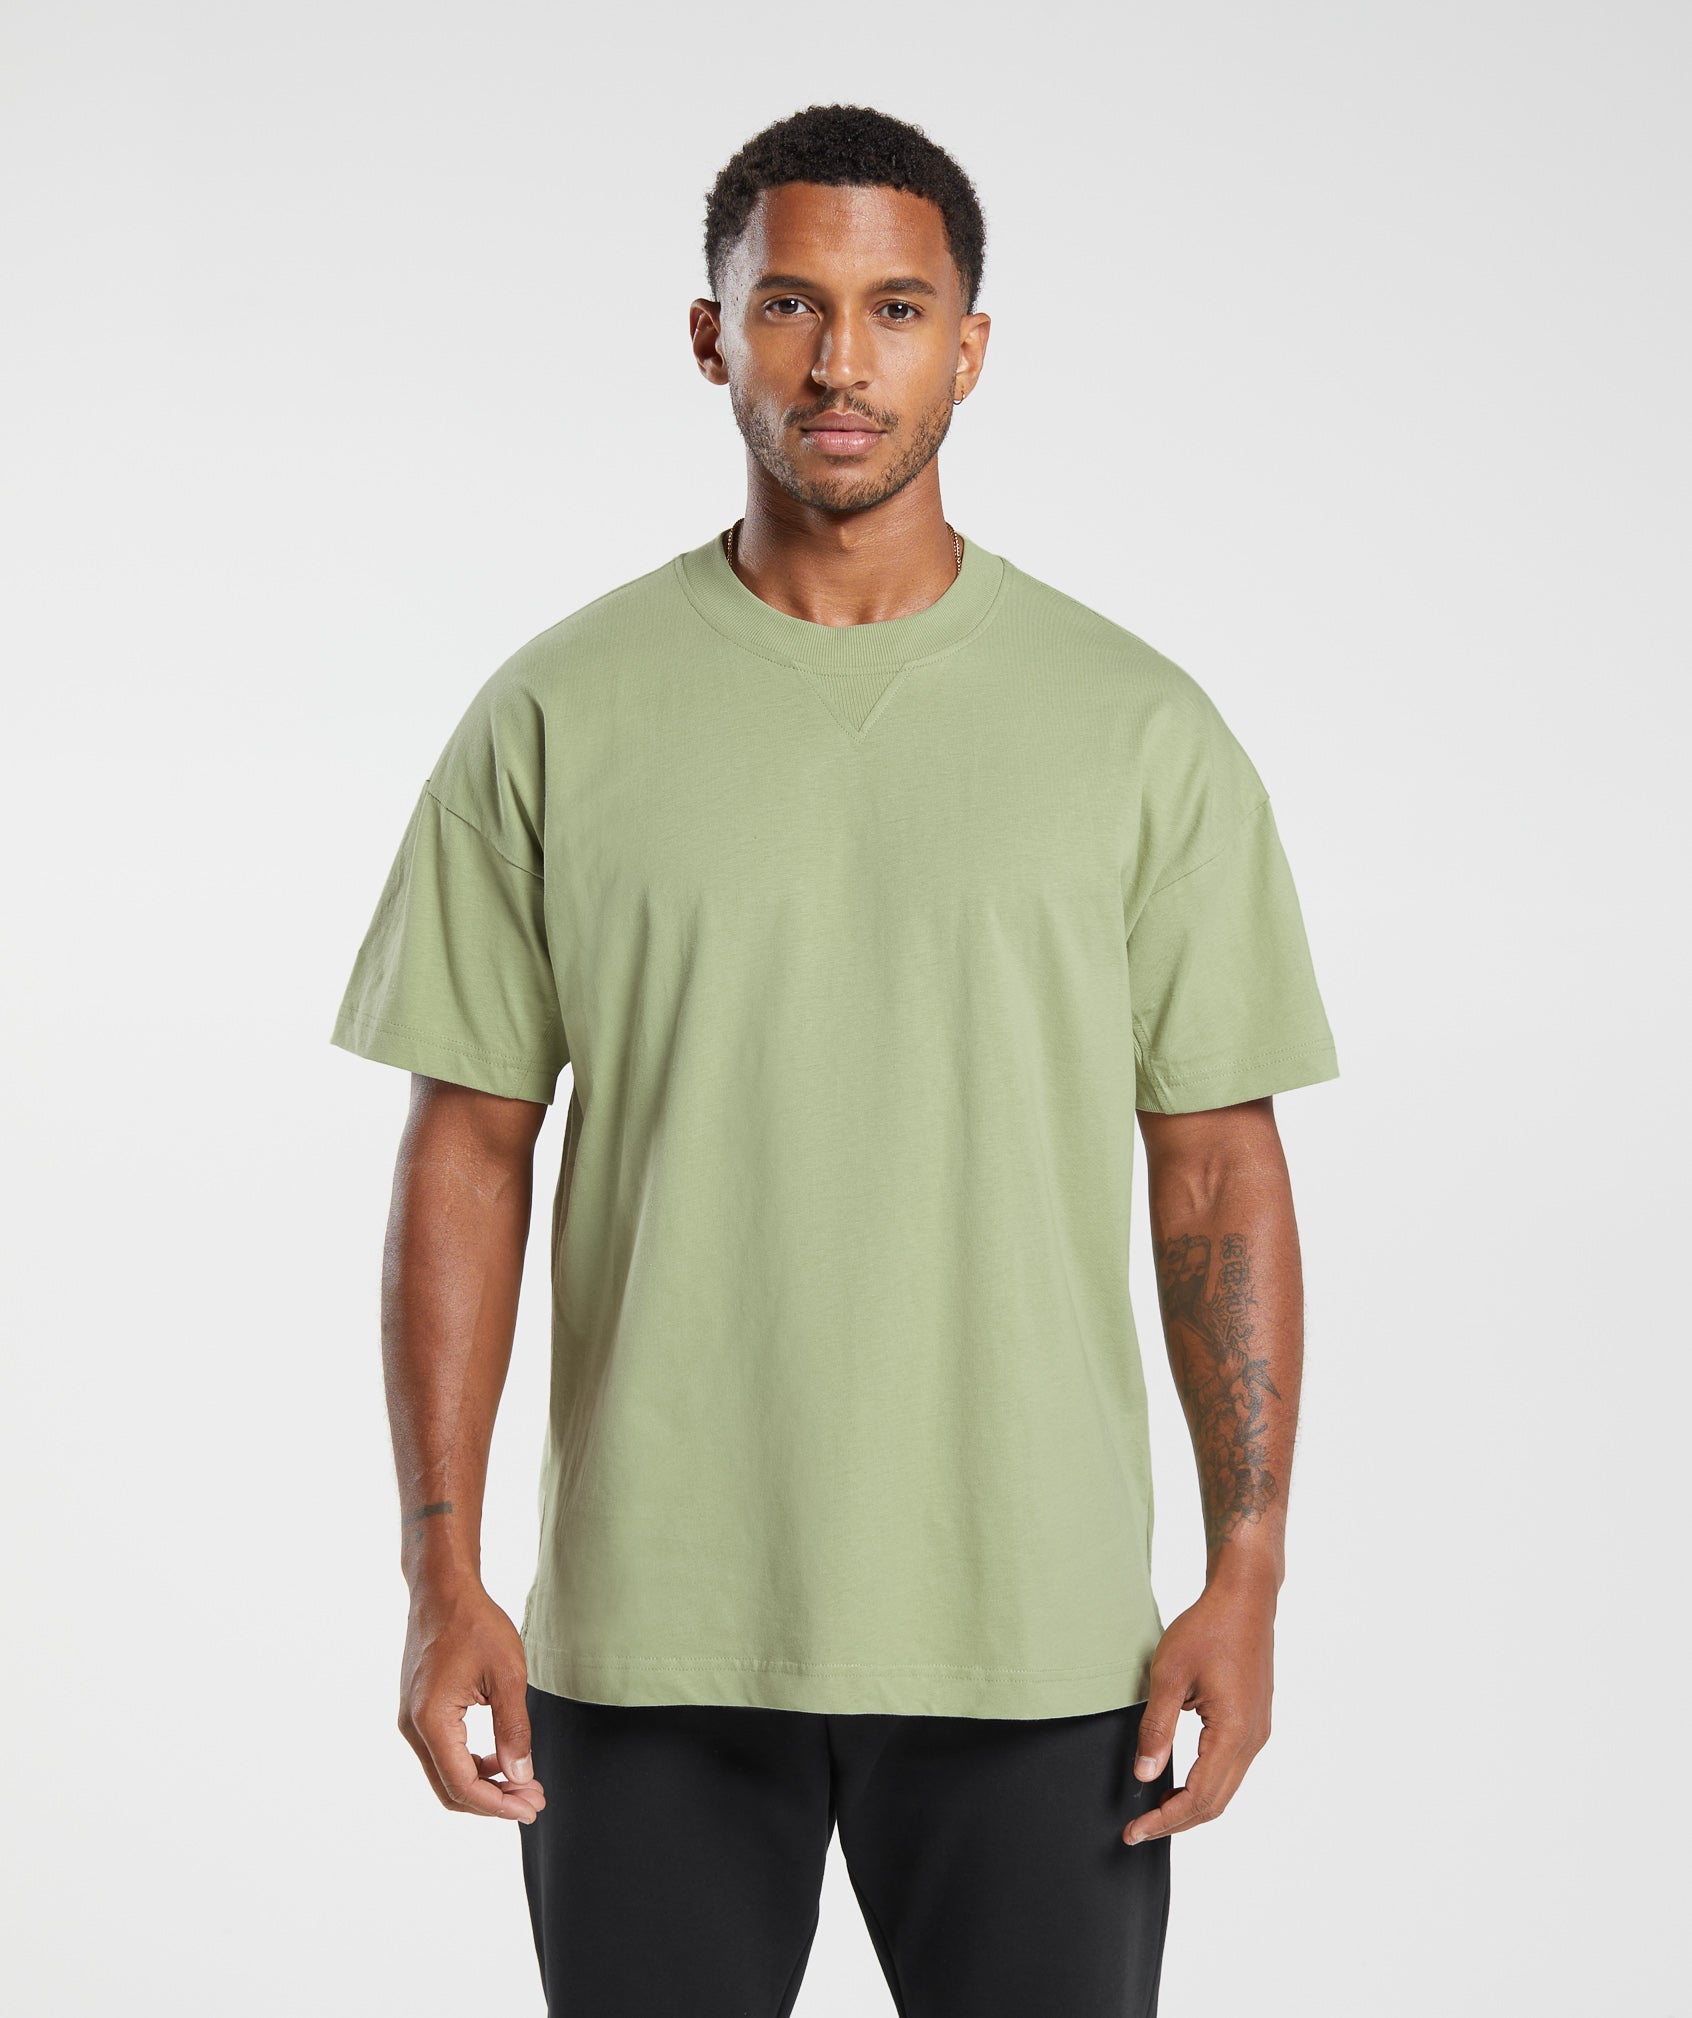 Rest Day Essentials T-Shirt in Light Sage Green - view 1